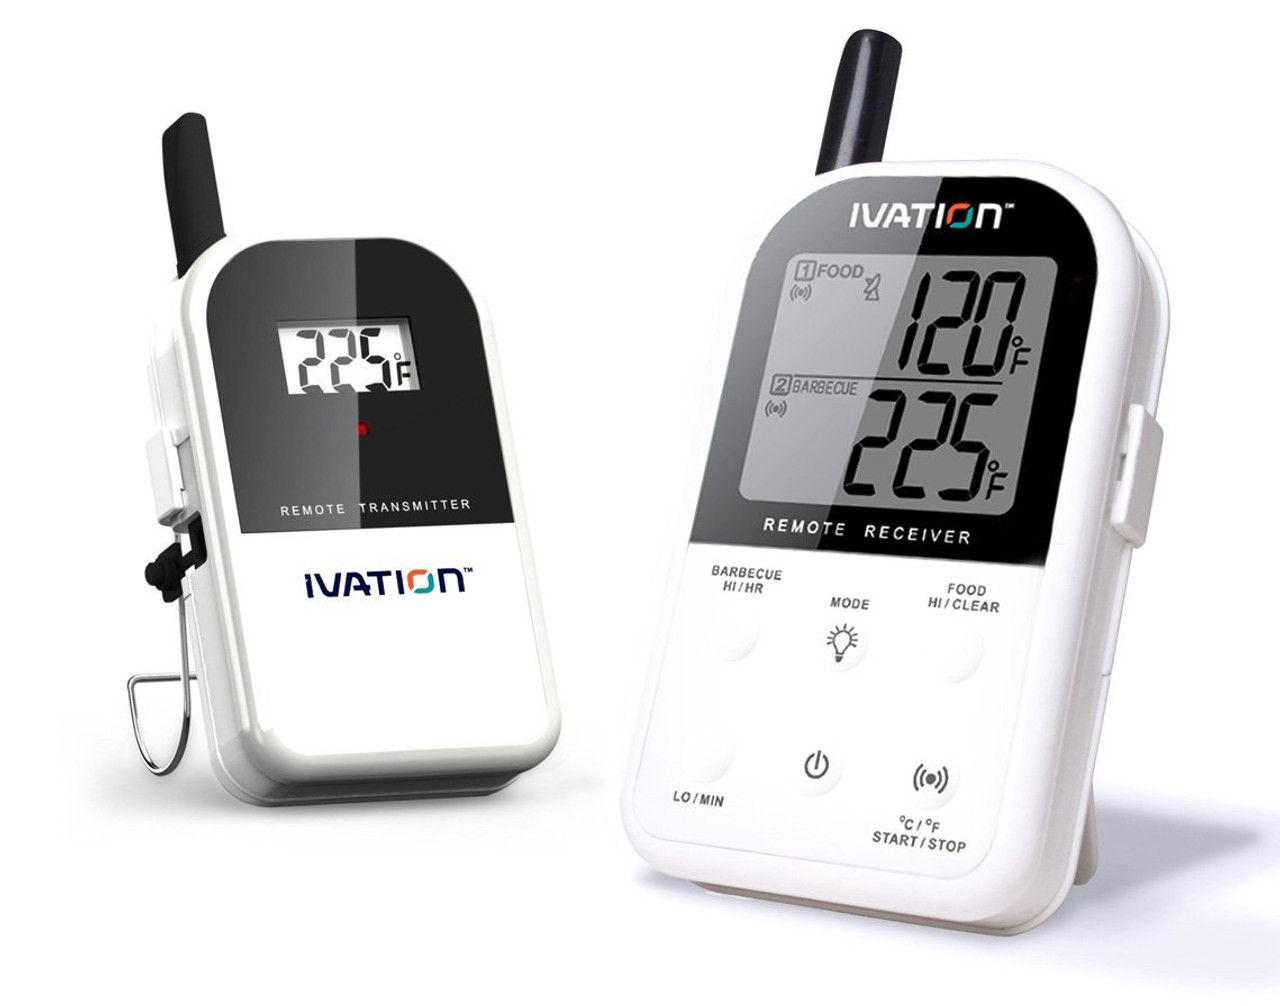 UEi, 550b, Pocket Digital Thermometer